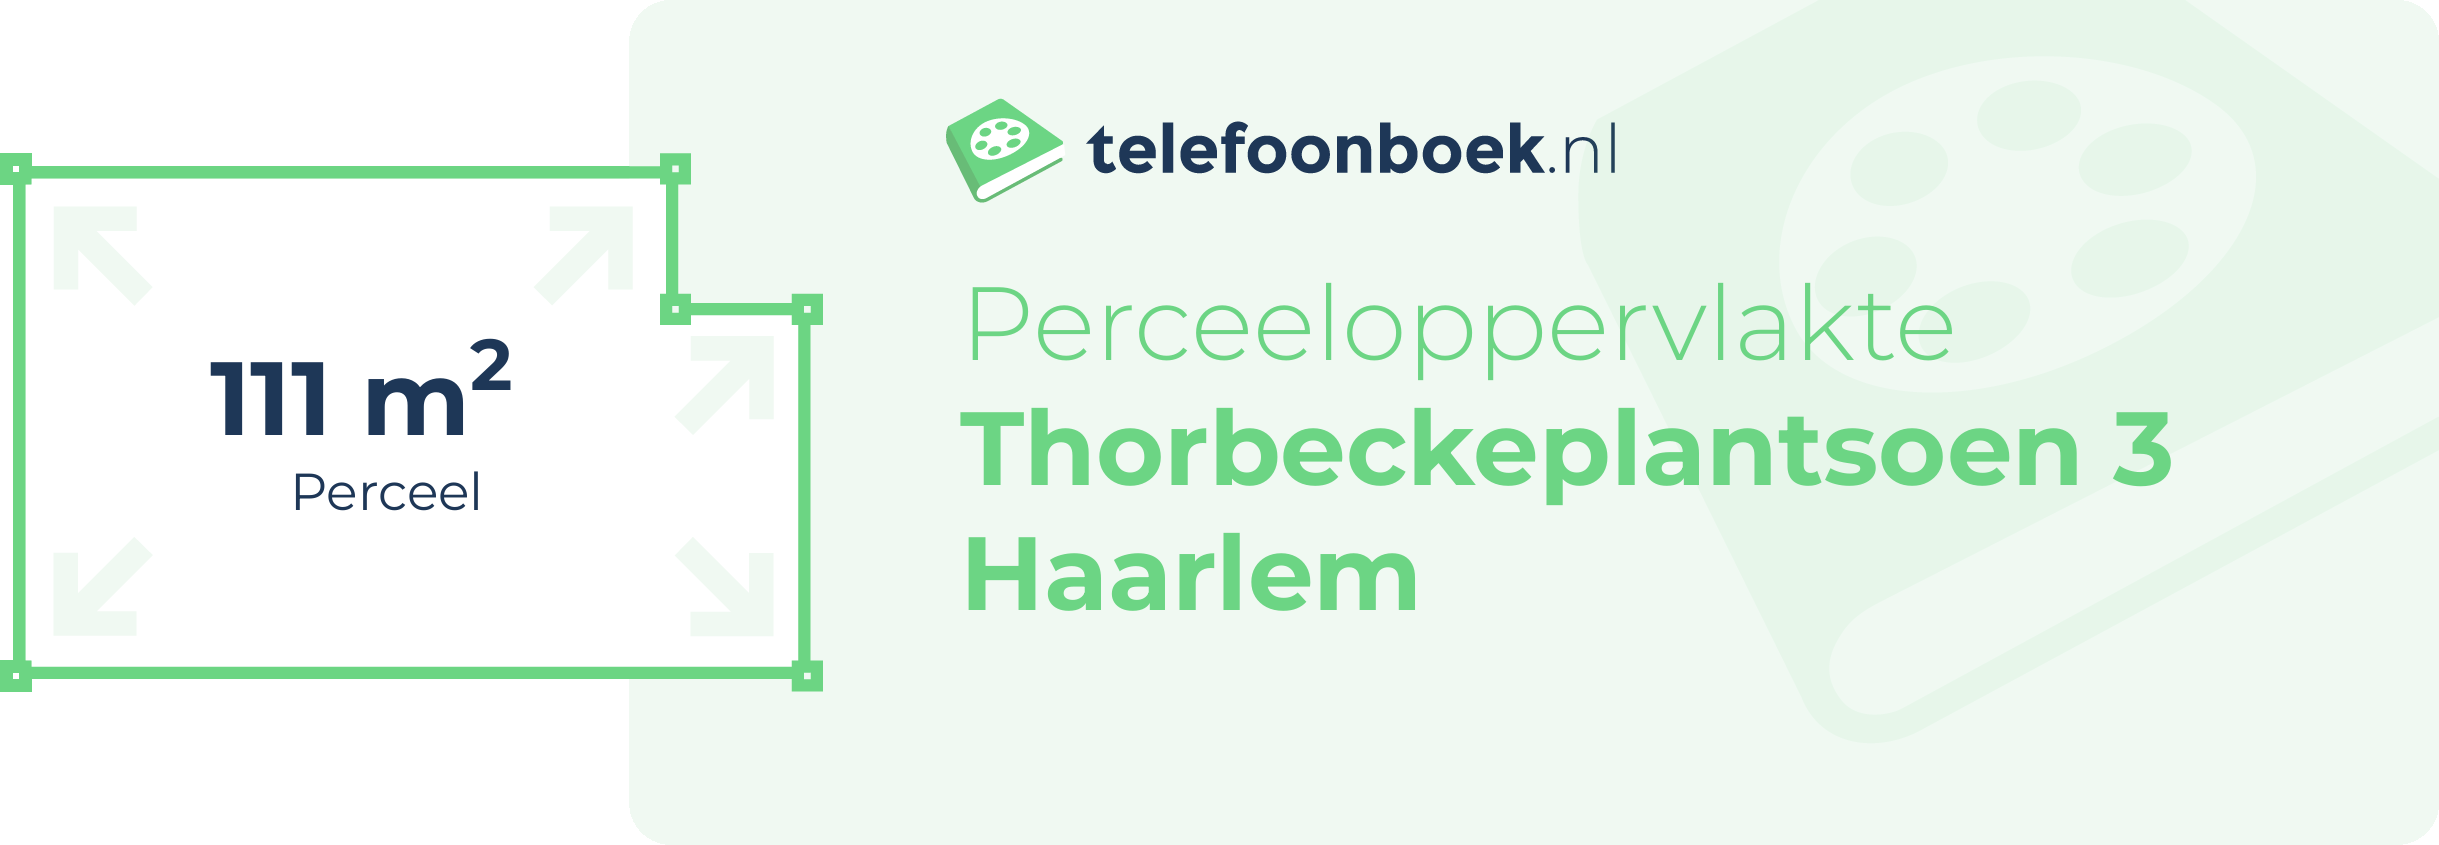 Perceeloppervlakte Thorbeckeplantsoen 3 Haarlem